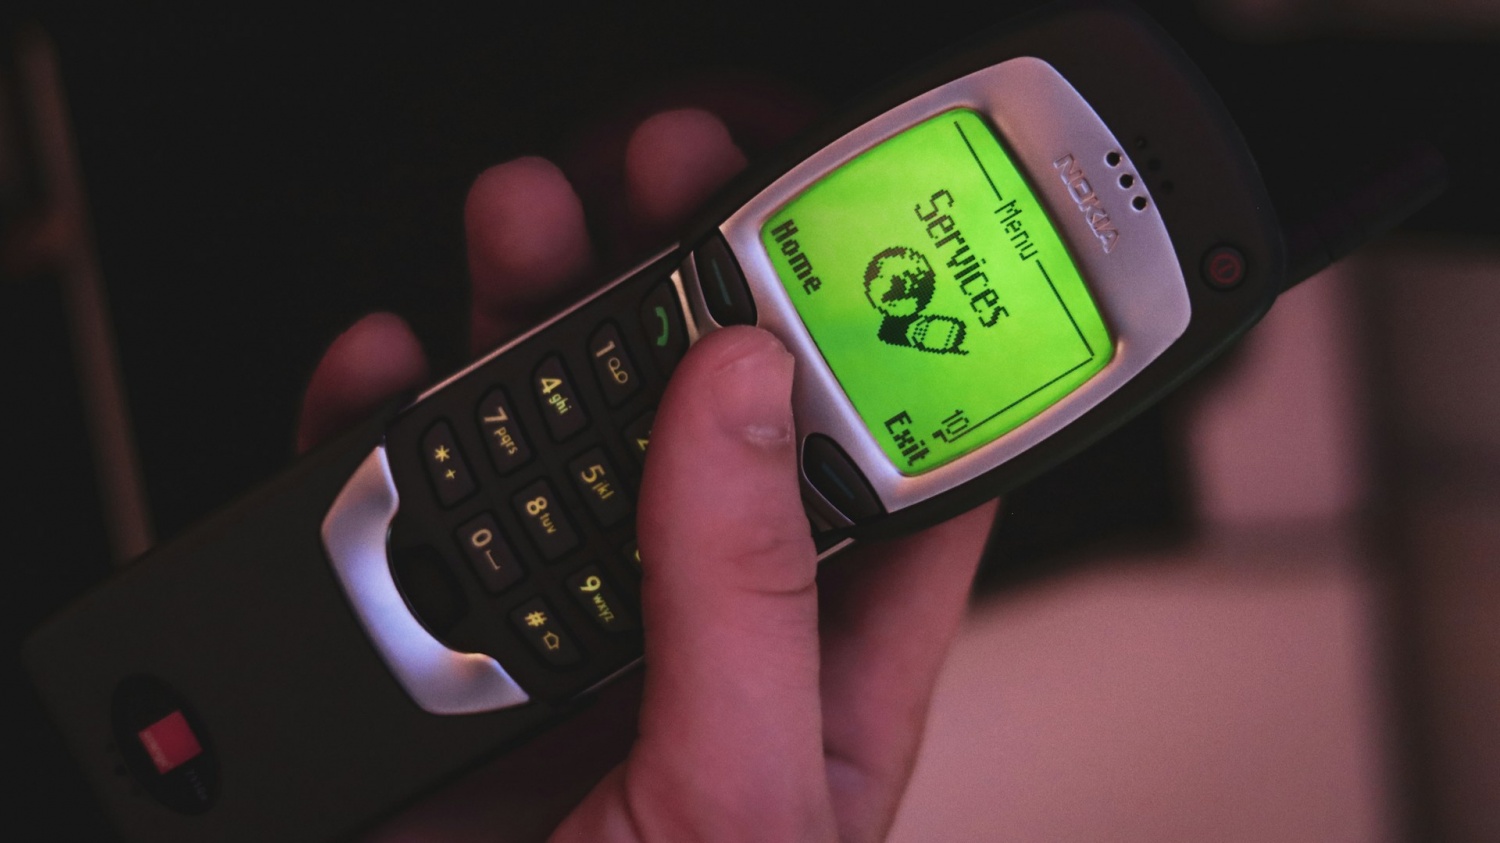 Nokia is Hyping 'Brick Phone' Era With Nokia 3210's Return